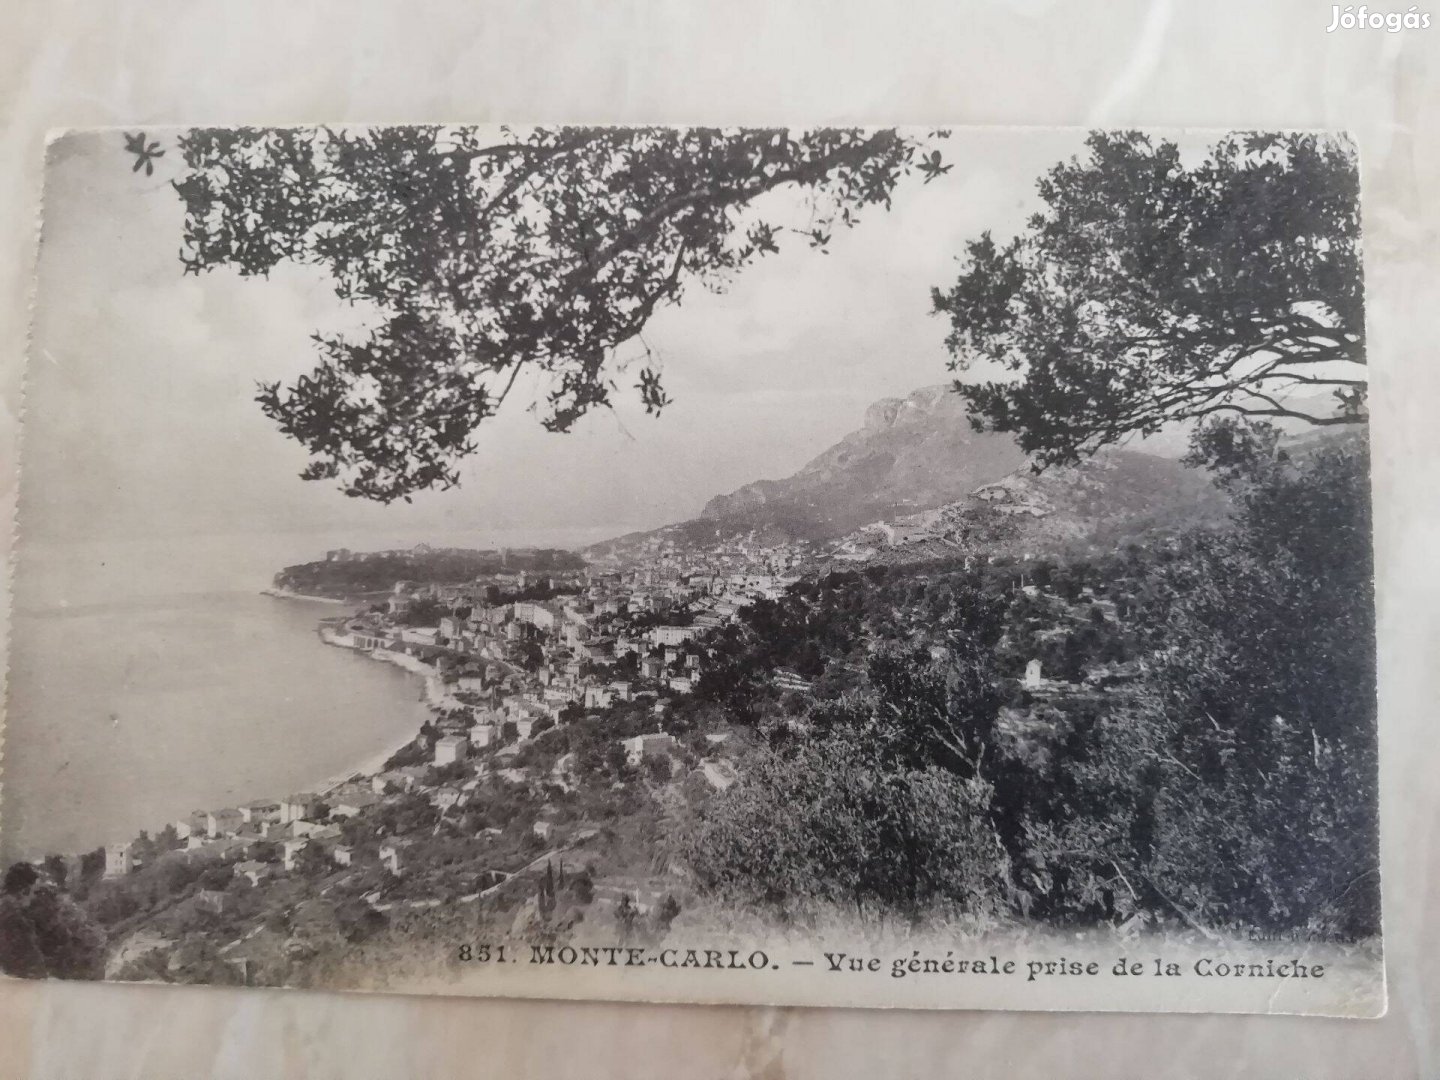 1912-es Monte-Carlo-i képeslap Budapestre cimezve